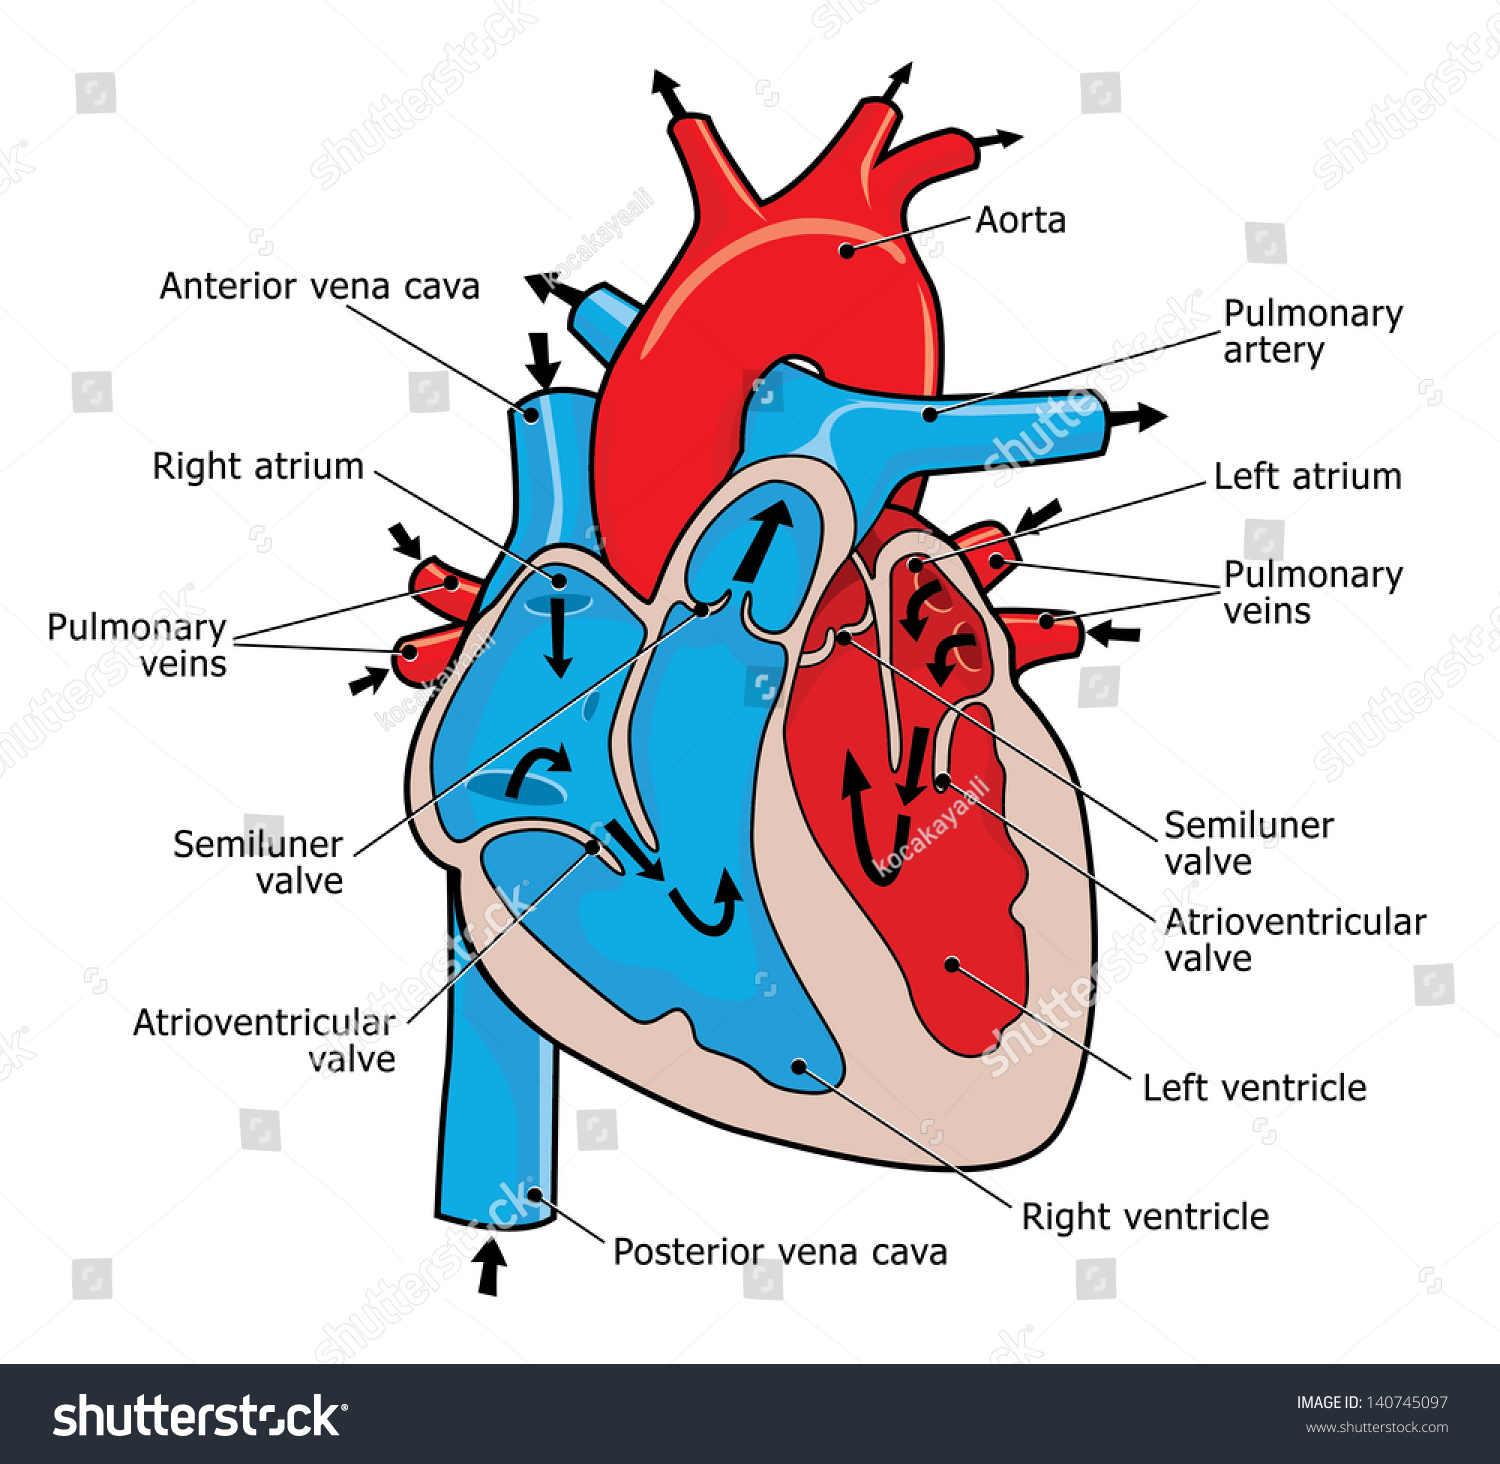 Anatomy Of The Human Heart Stock Photo 140745097 ...